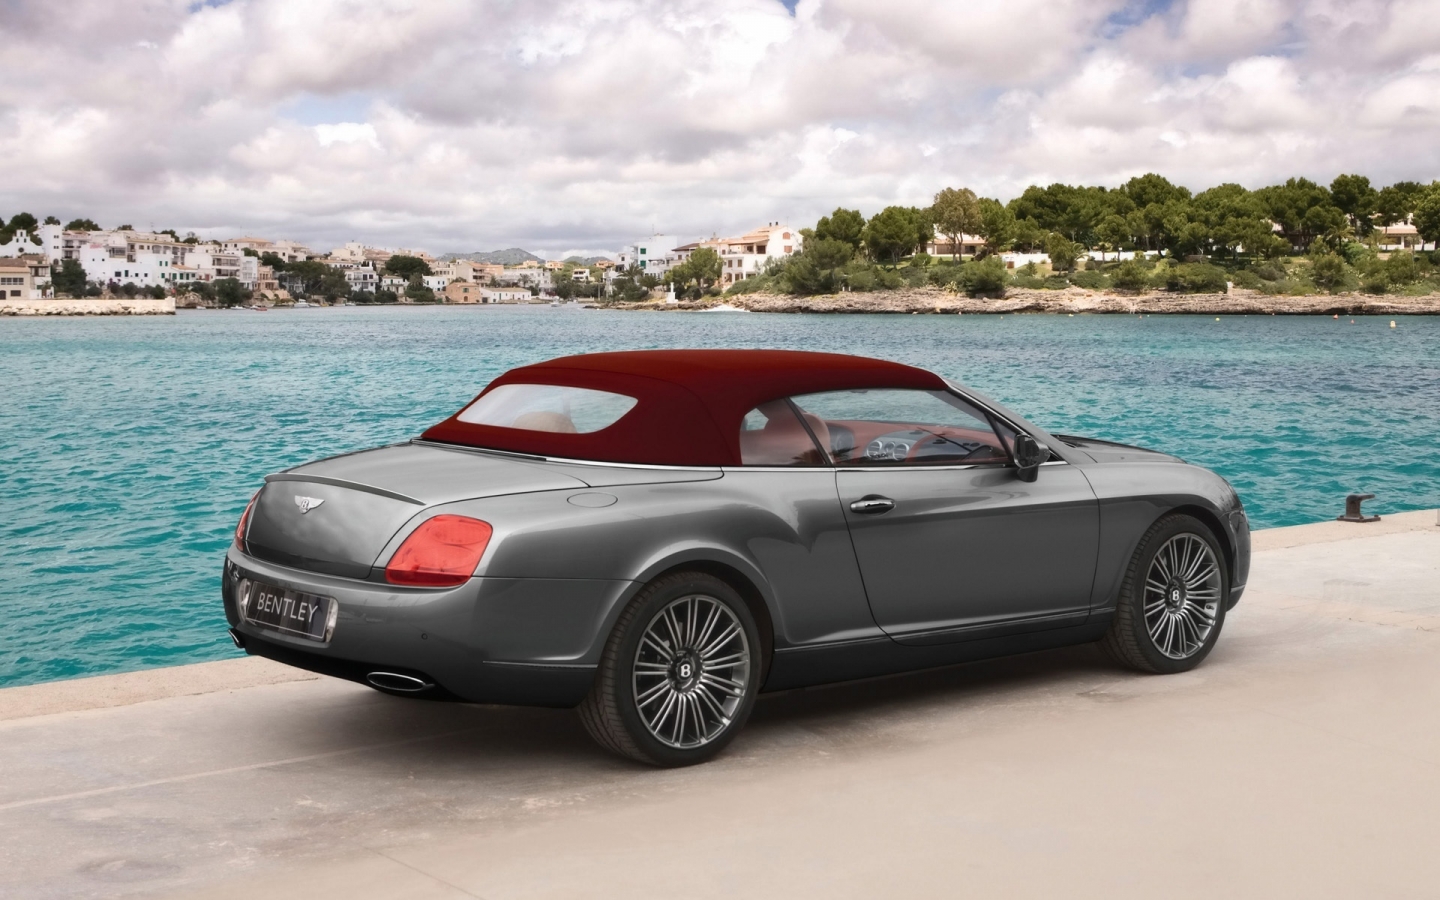 Bentley Continental GTC 2009 for 1440 x 900 widescreen resolution